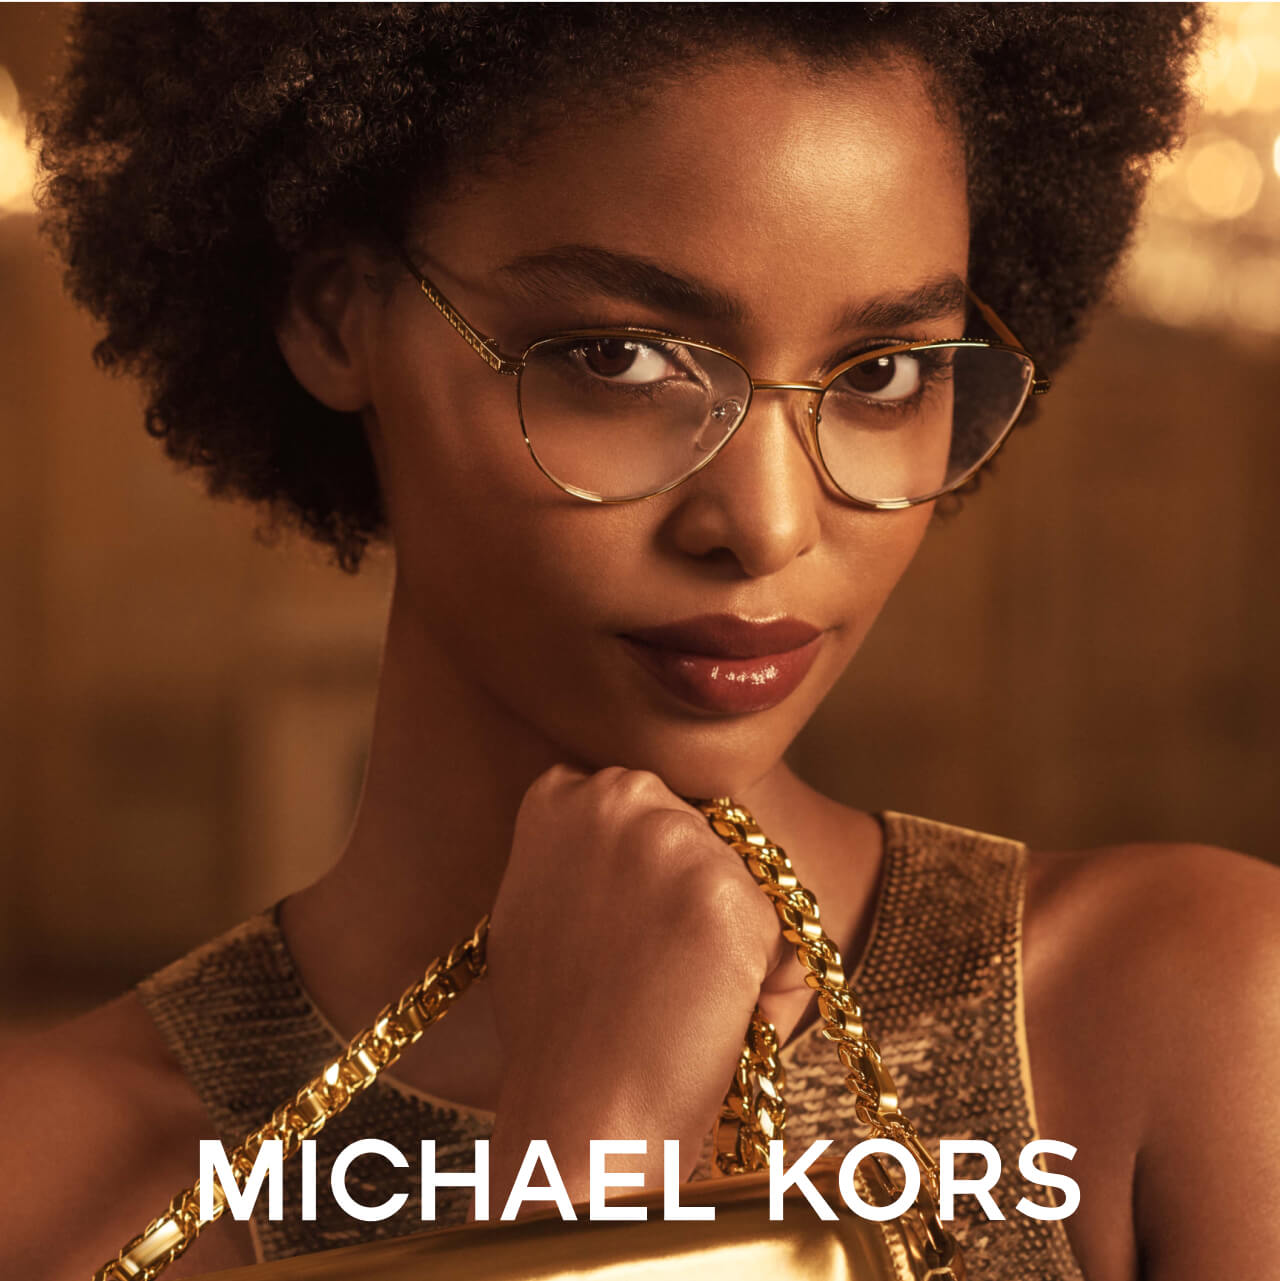 Michael Kors - Fashion Accessories Store